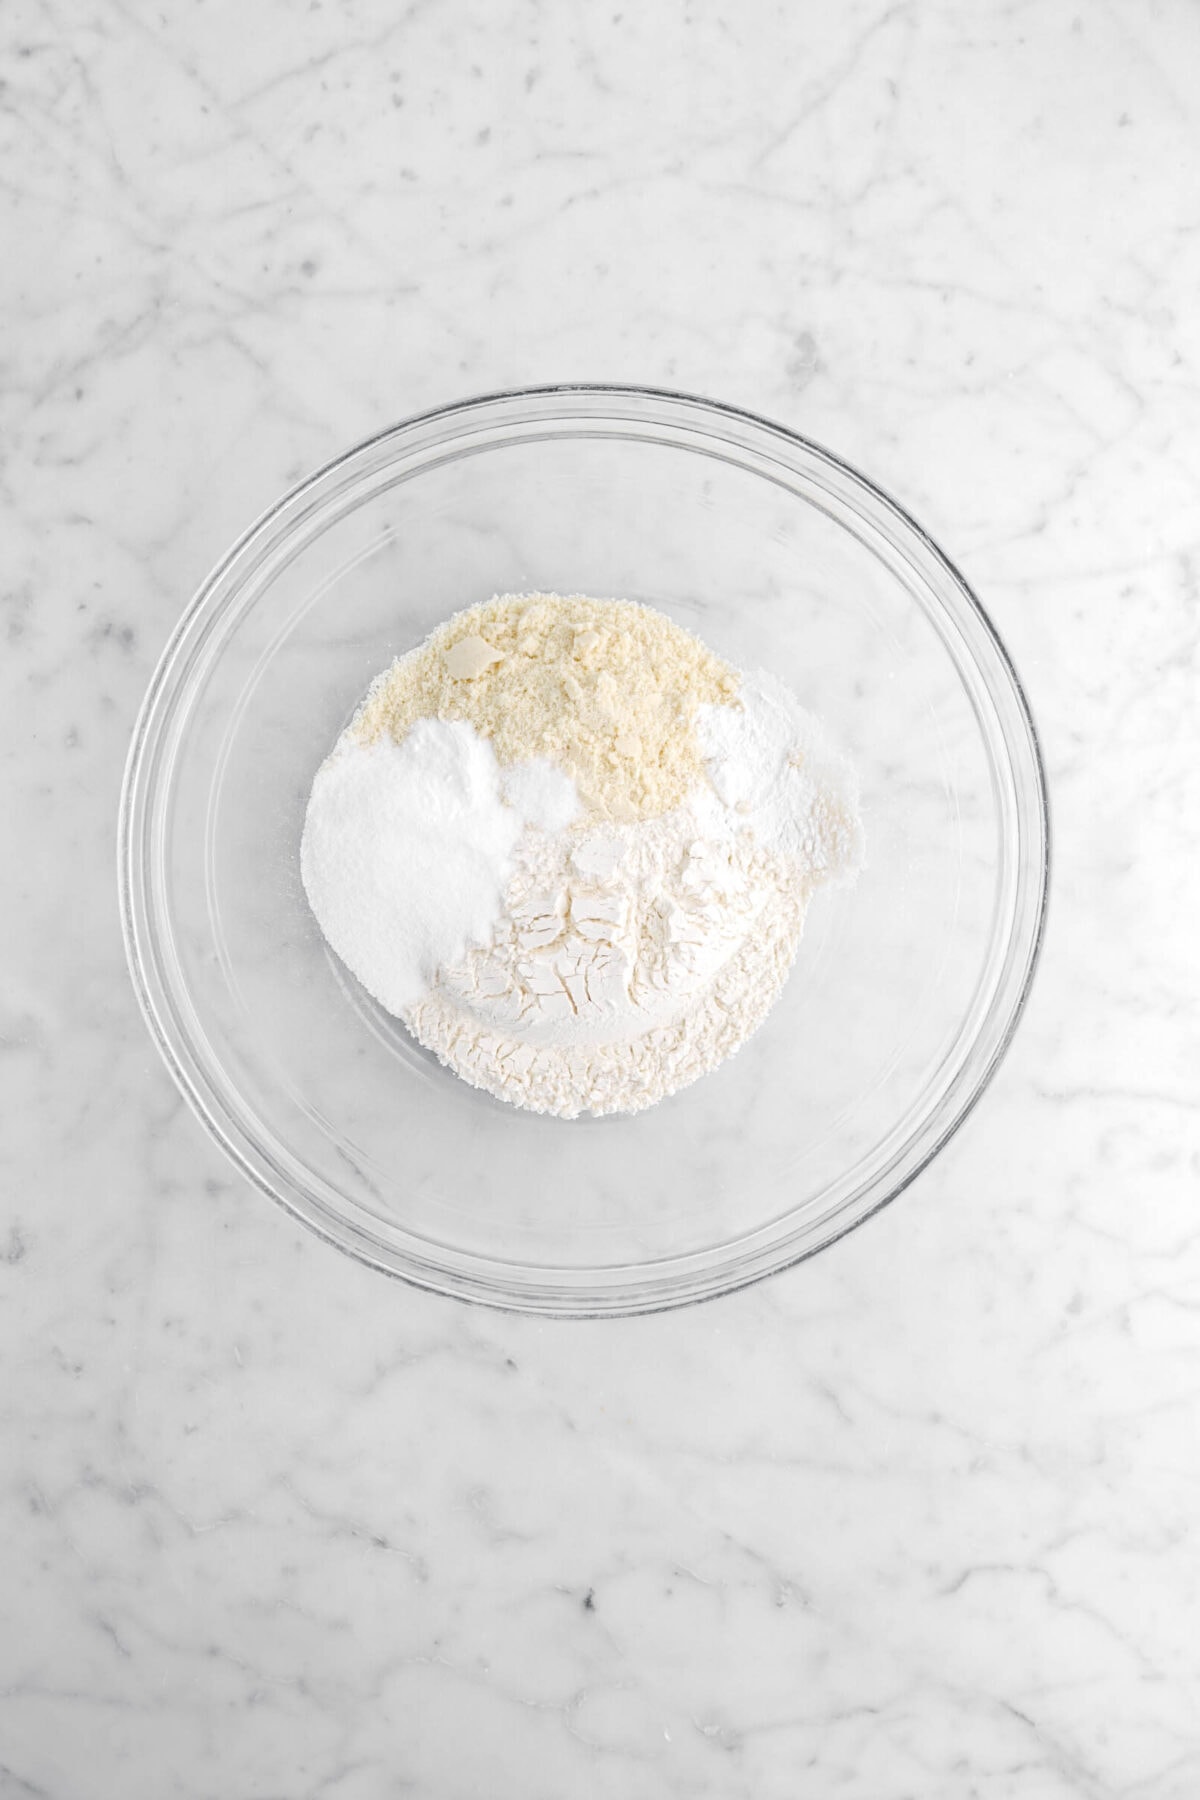 flour, sugar, baking soda, salt, almond flour, and baking powder in glass bowl.